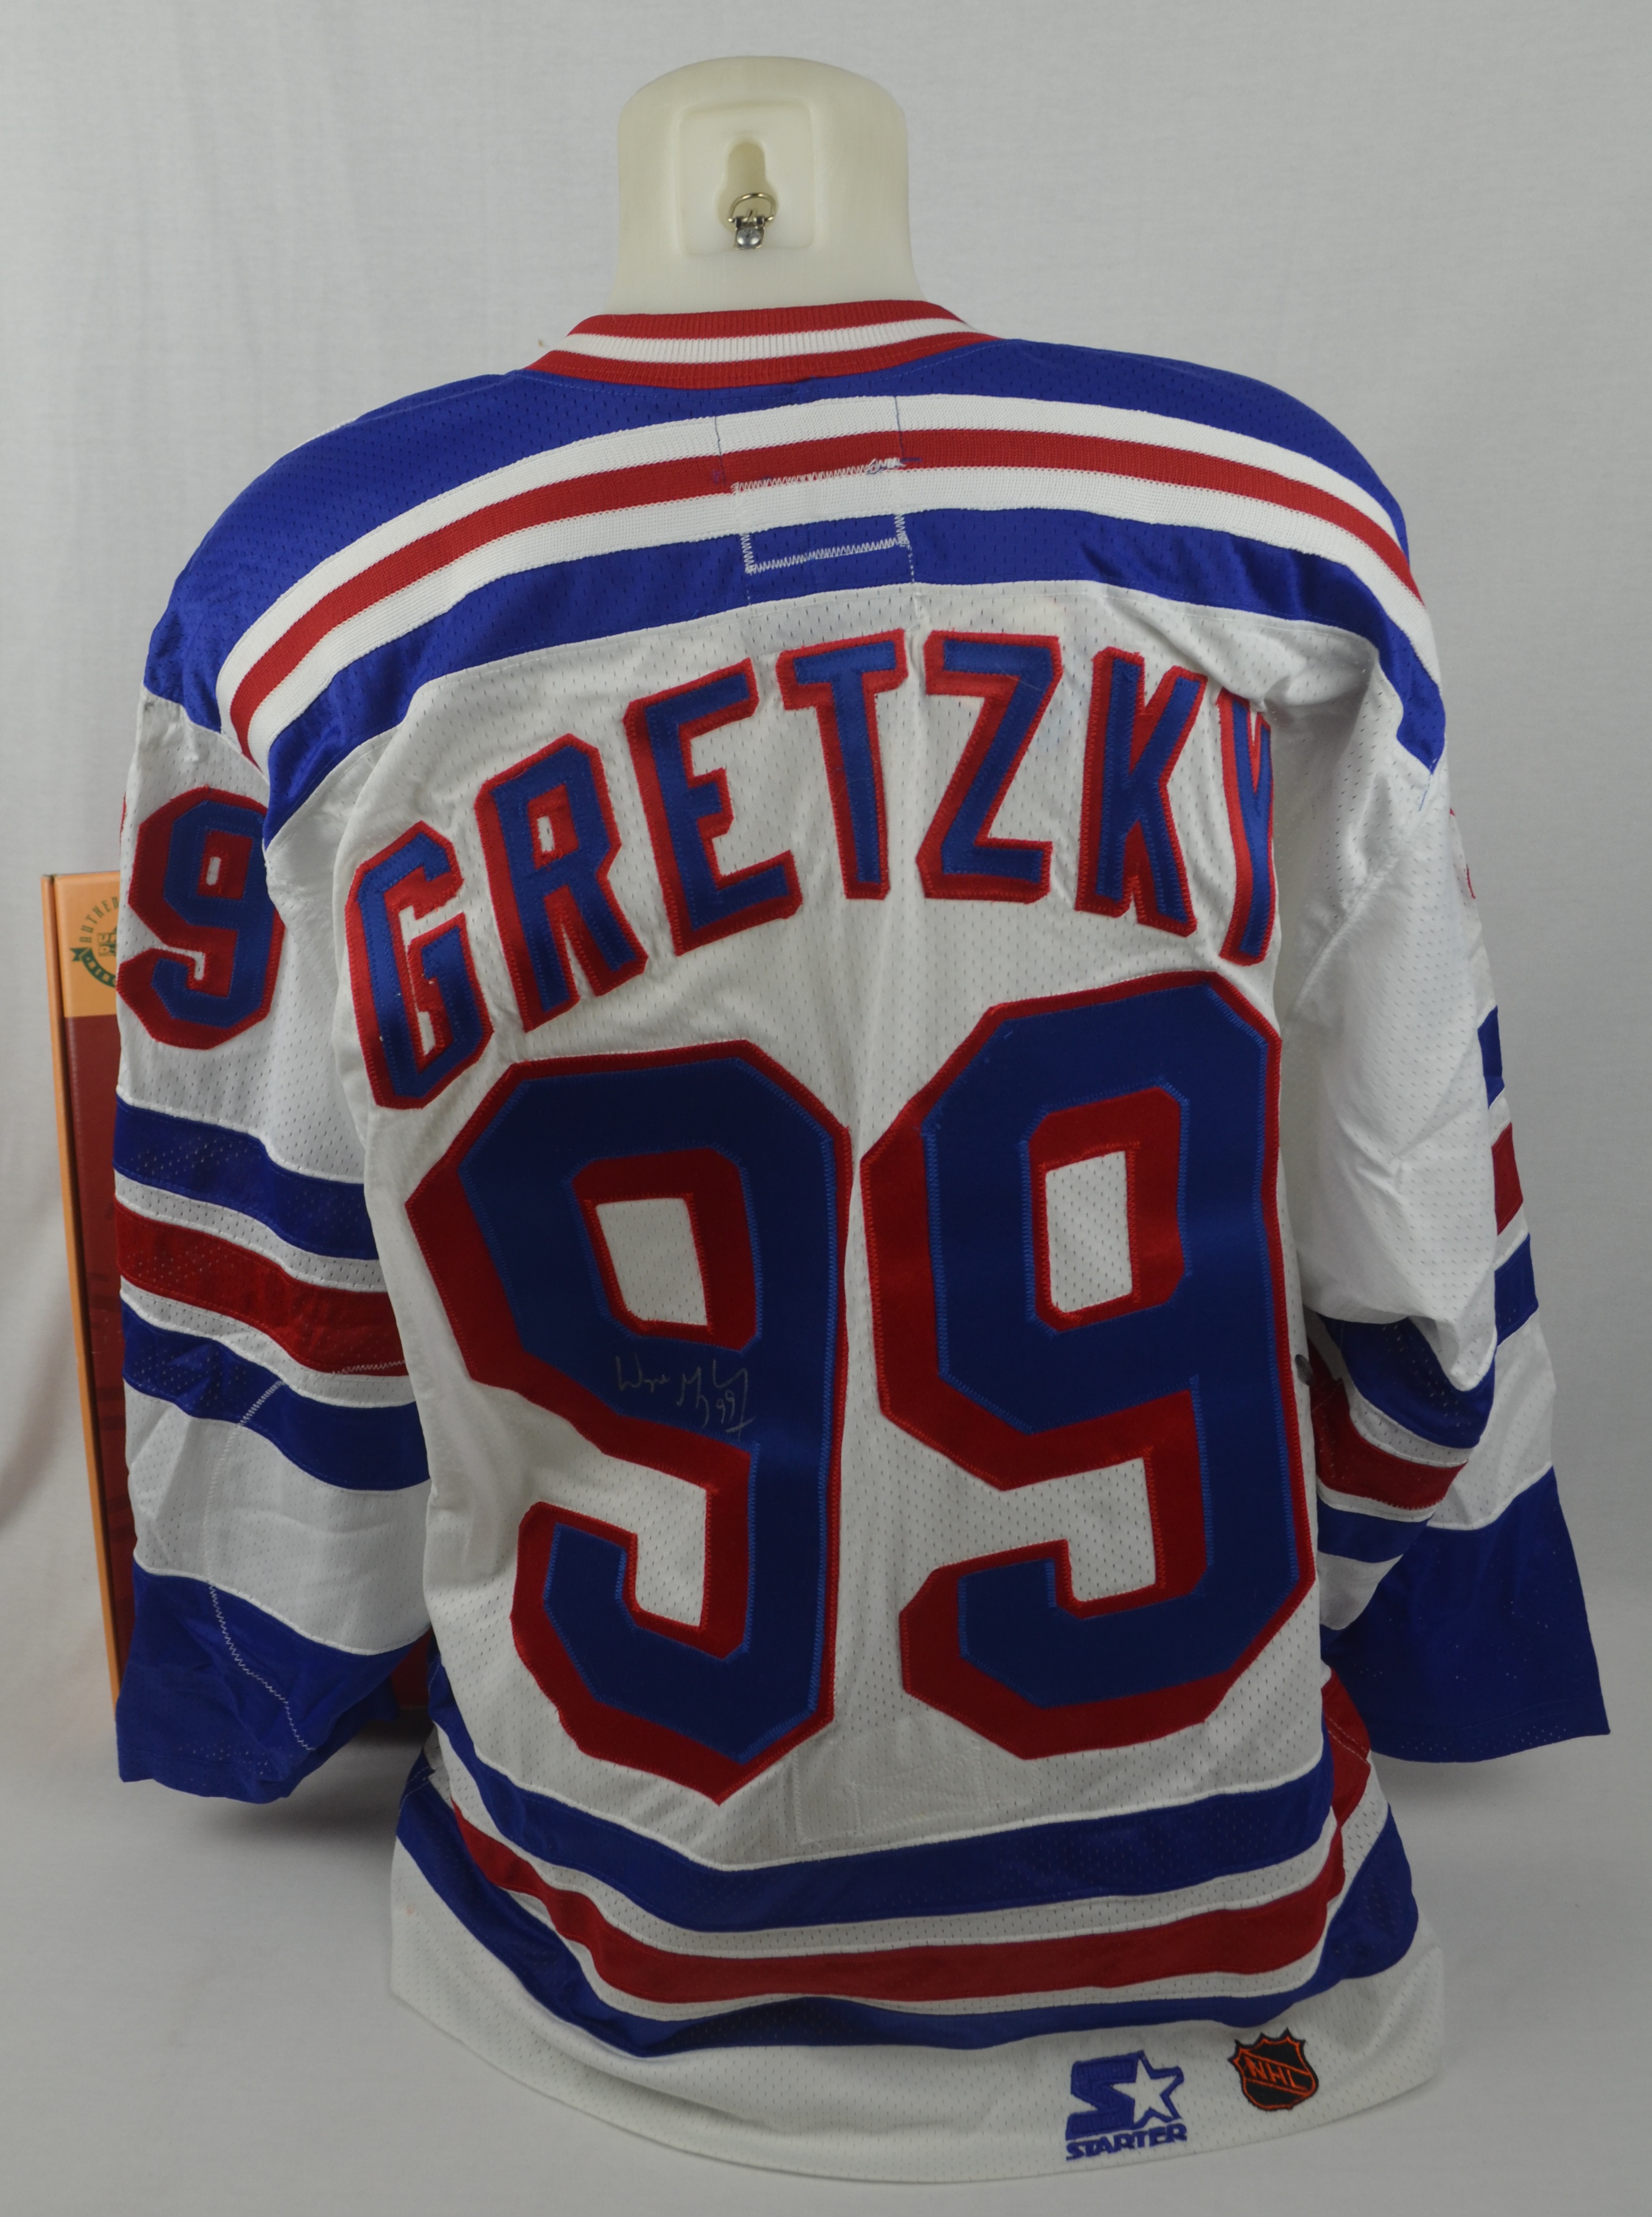 Wayne Gretzky Signed New York Rangers Jersey, Upper Deck